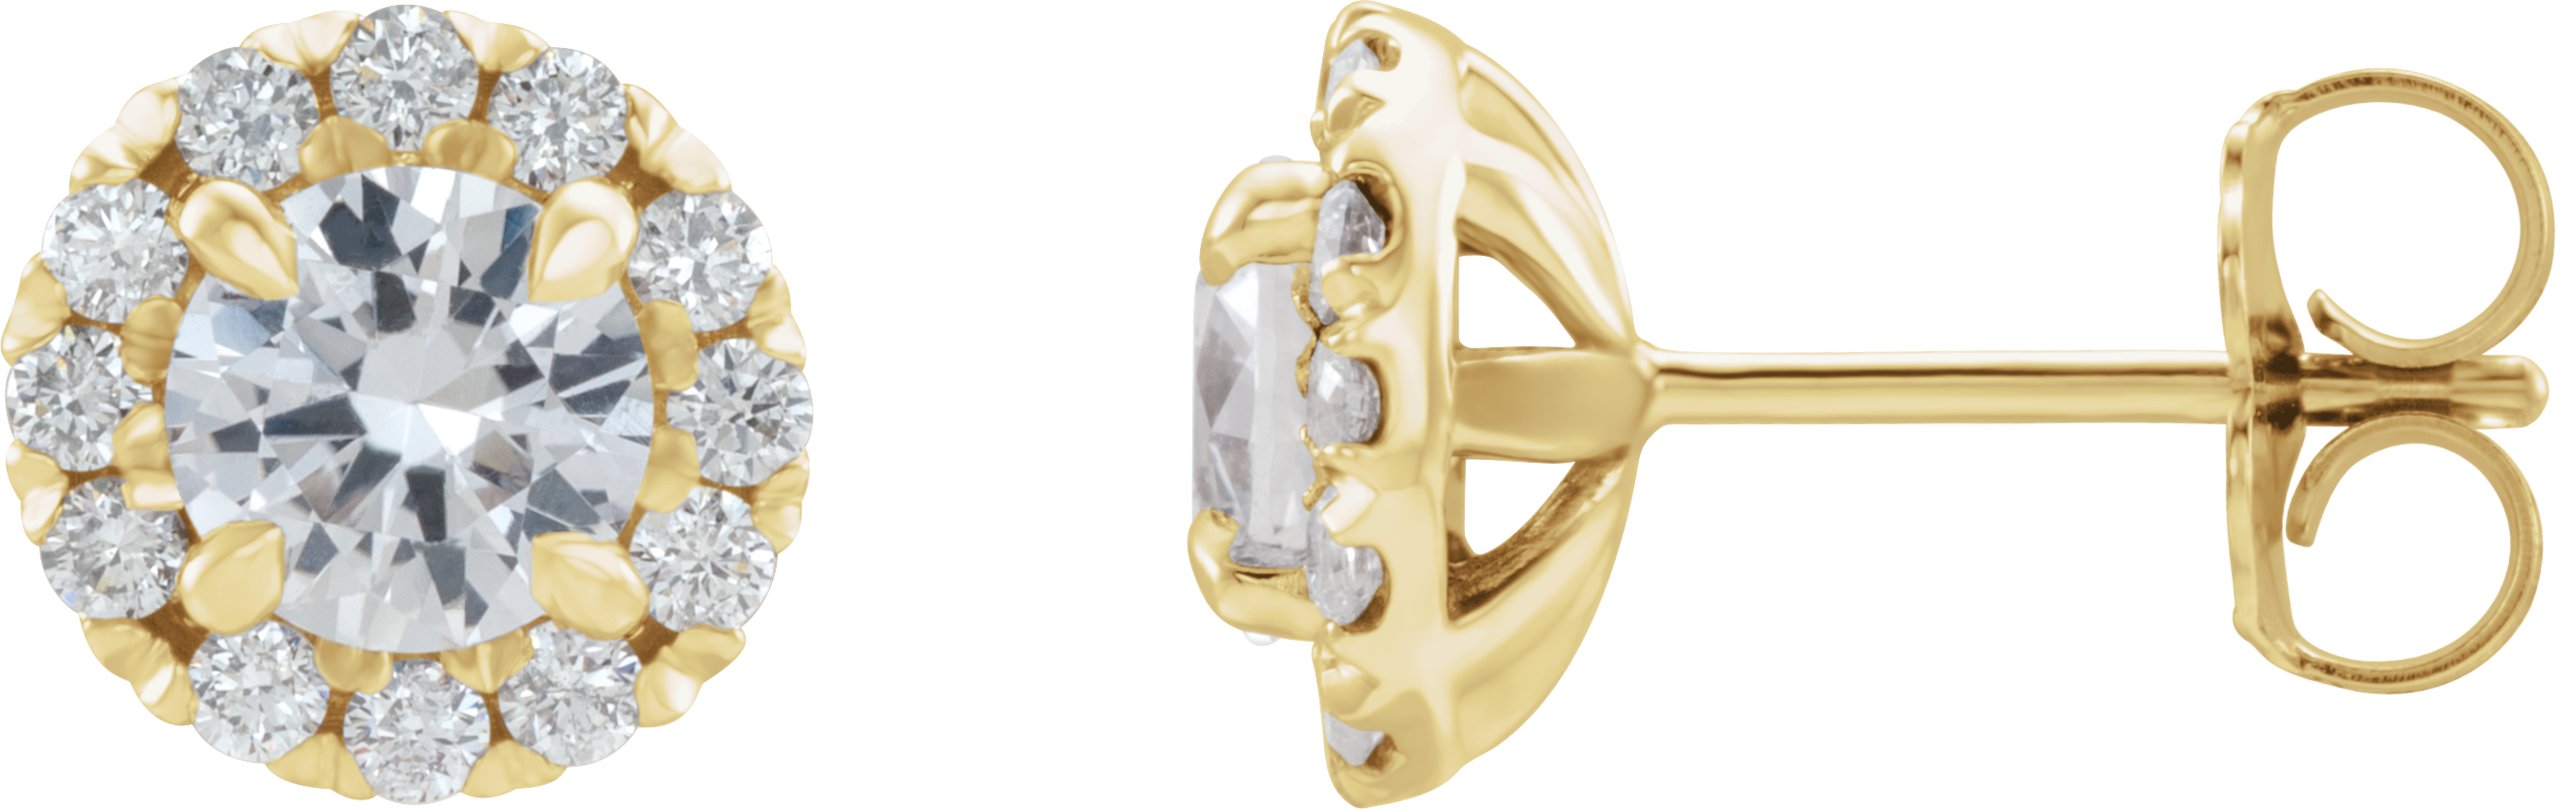 14K Yellow 1.25 CTW Diamond Halo Style Earrings Ref 16042387